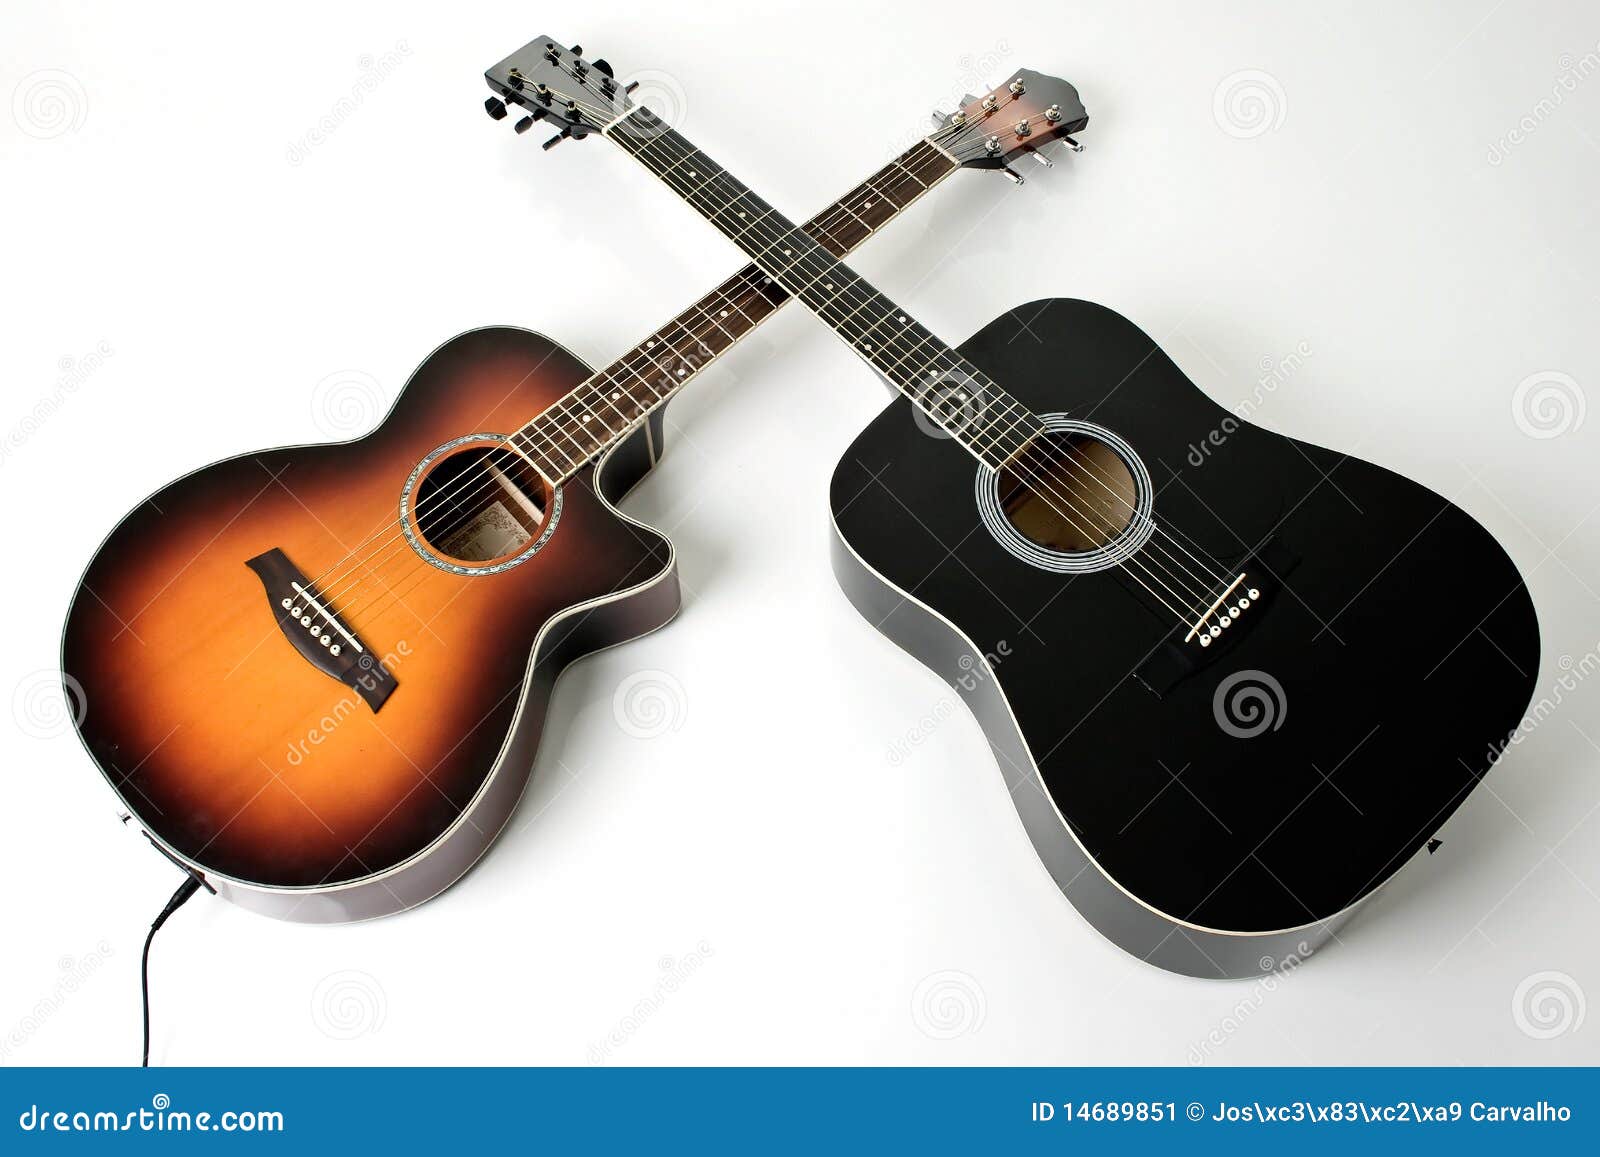 pair of acoustic guitars